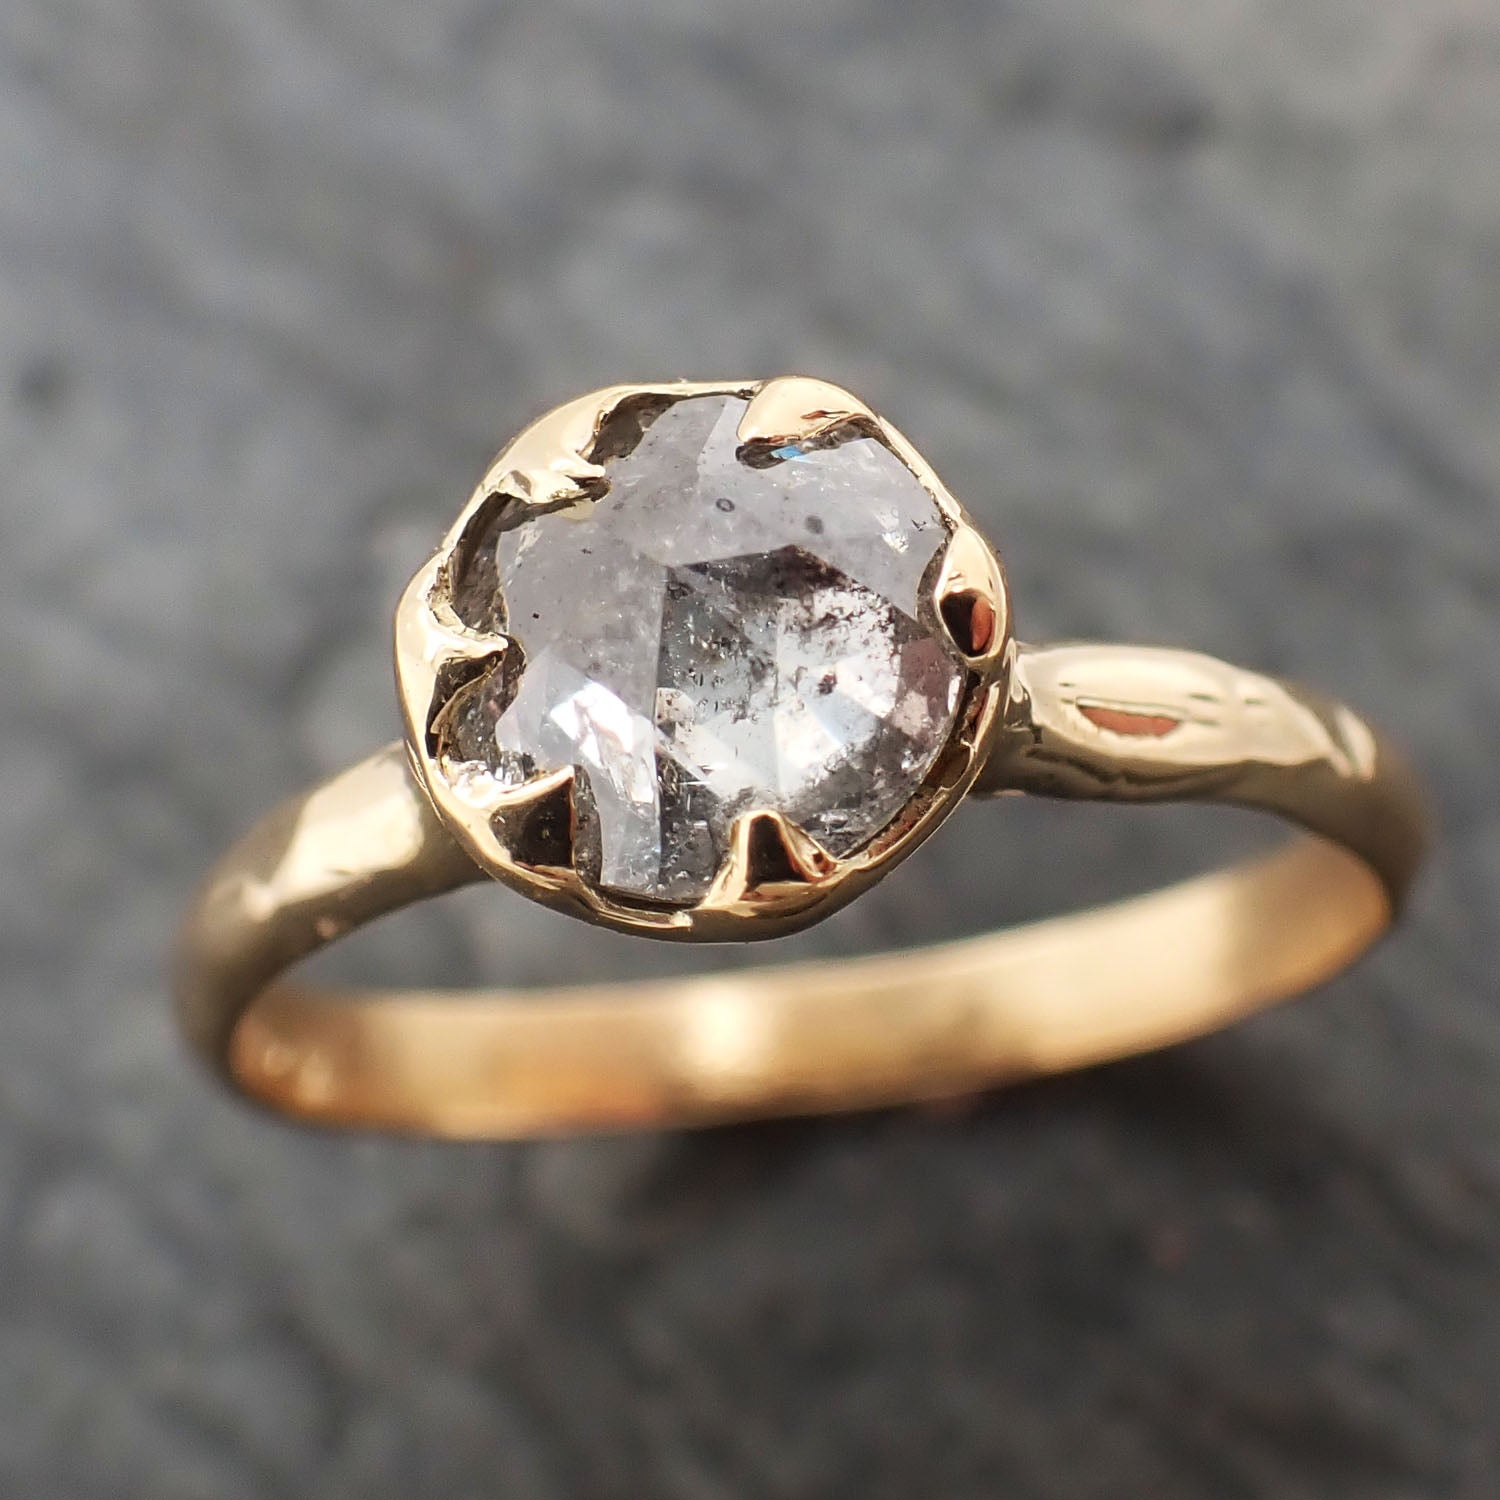 fancy cut white diamond solitaire engagement 18k yellow gold wedding ring diamond ring byangeline 2315 Alternative Engagement